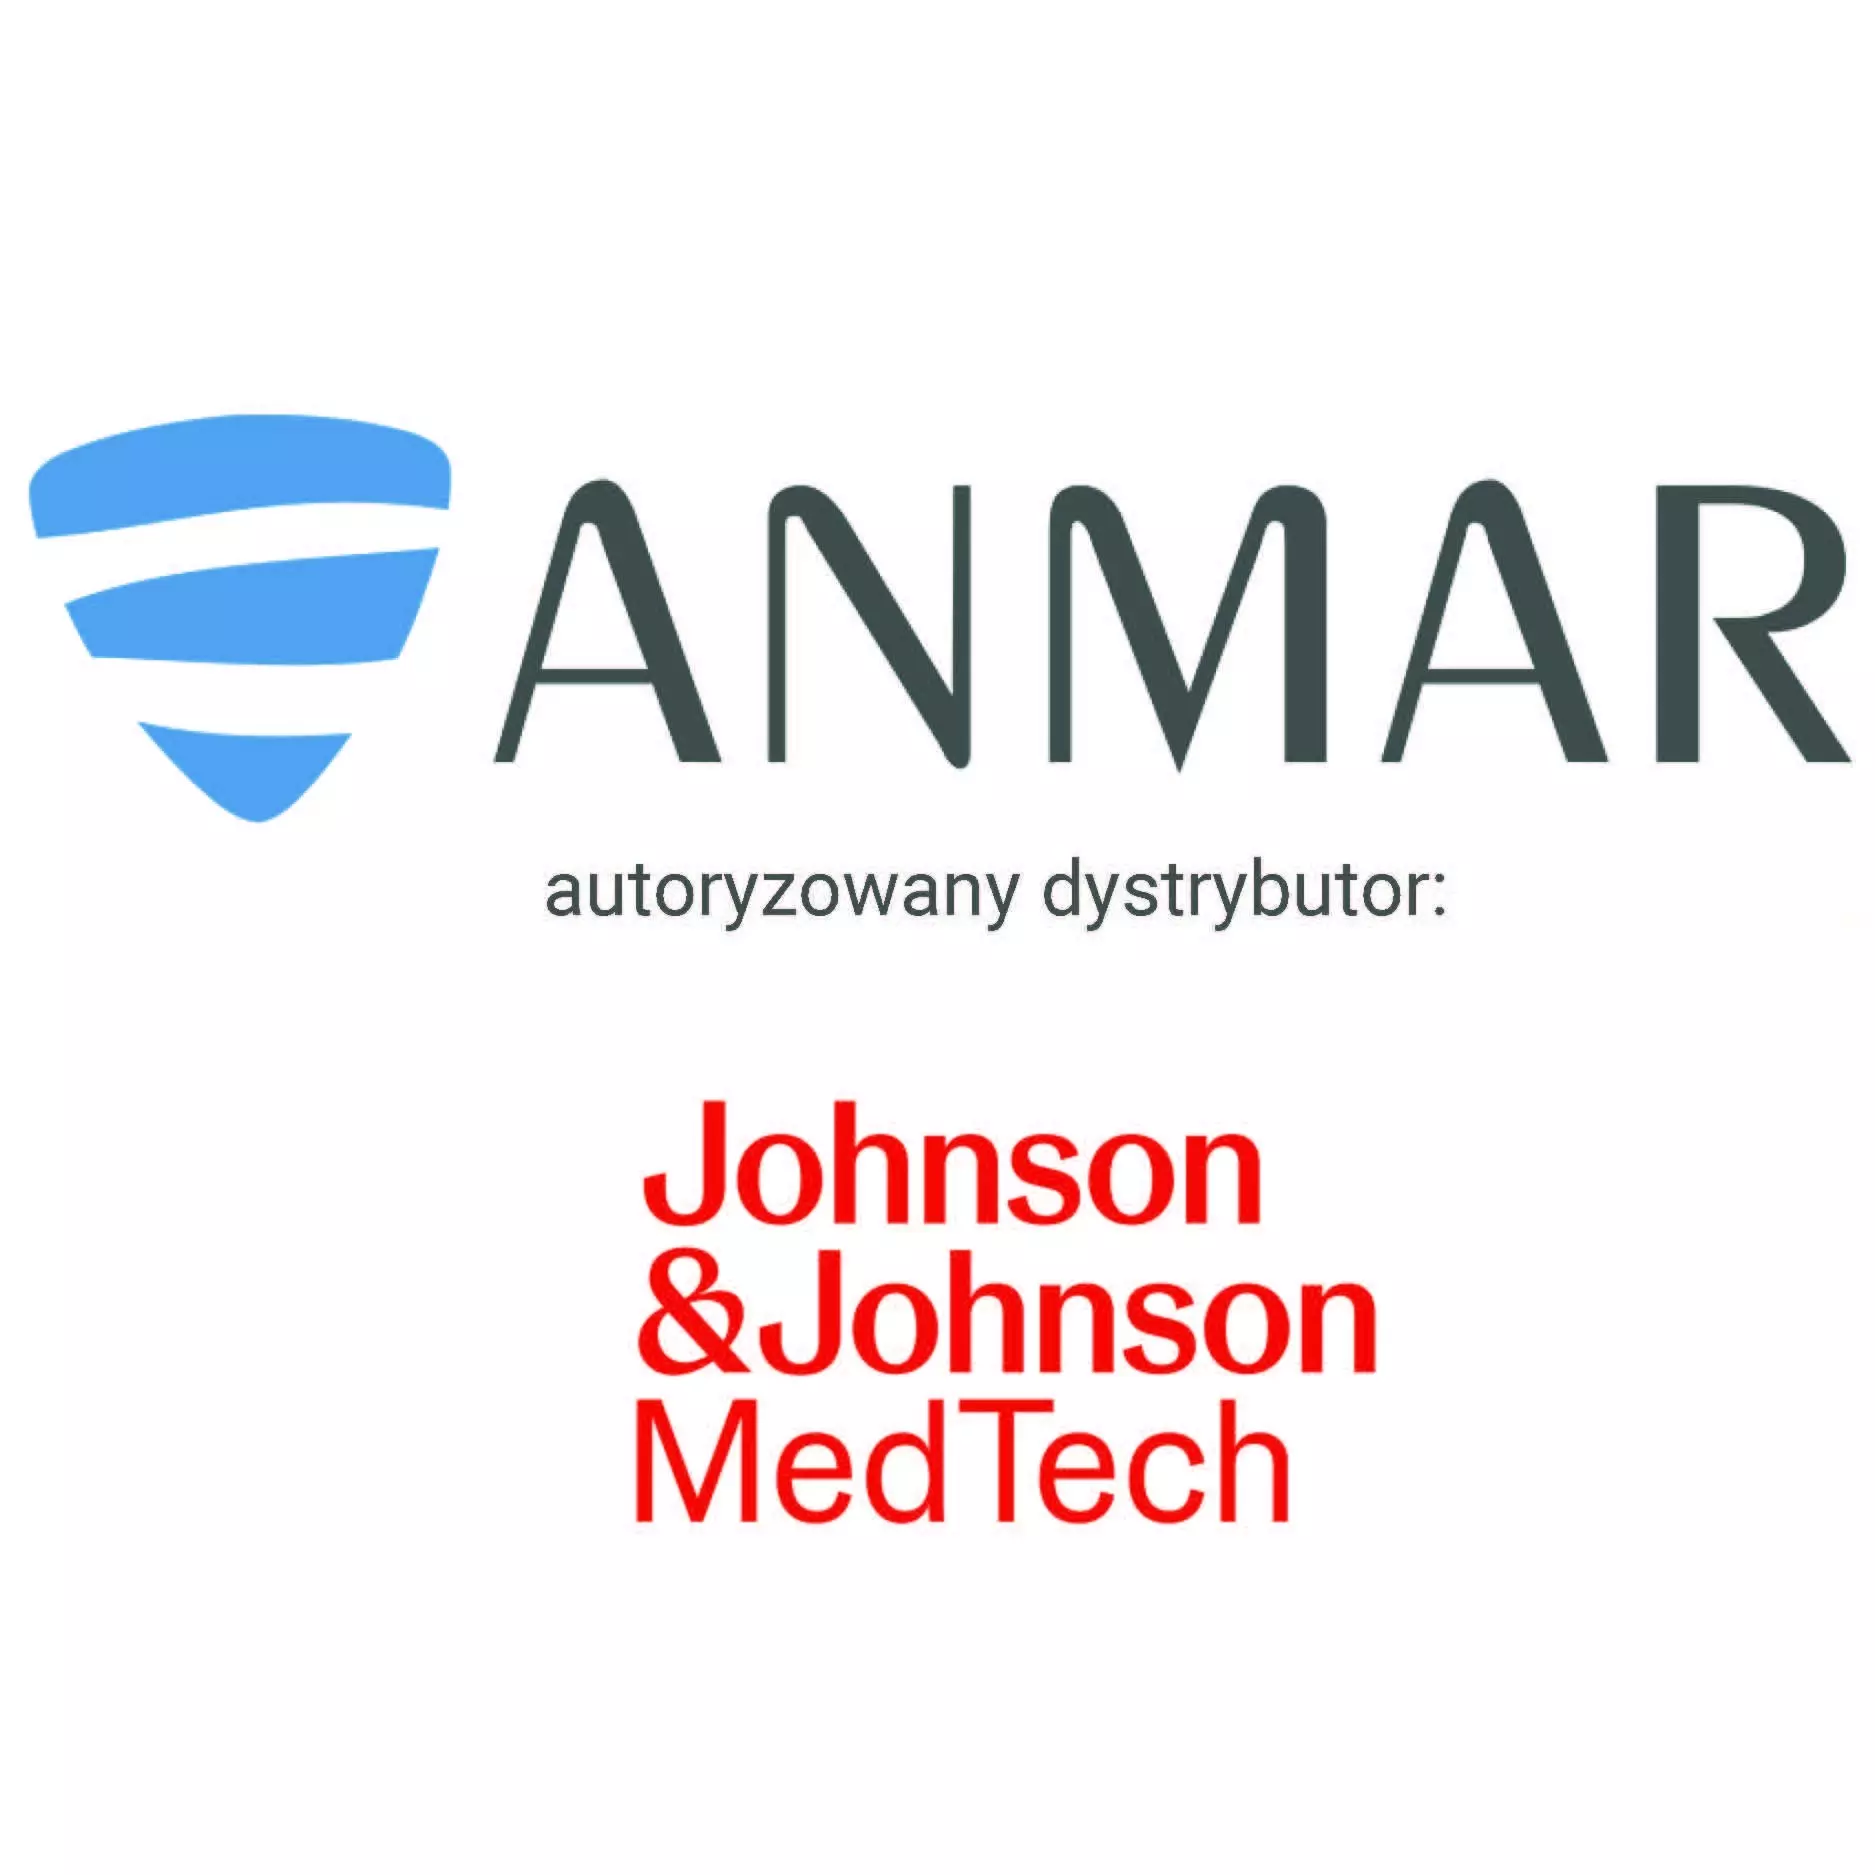 Anmar & Johnson